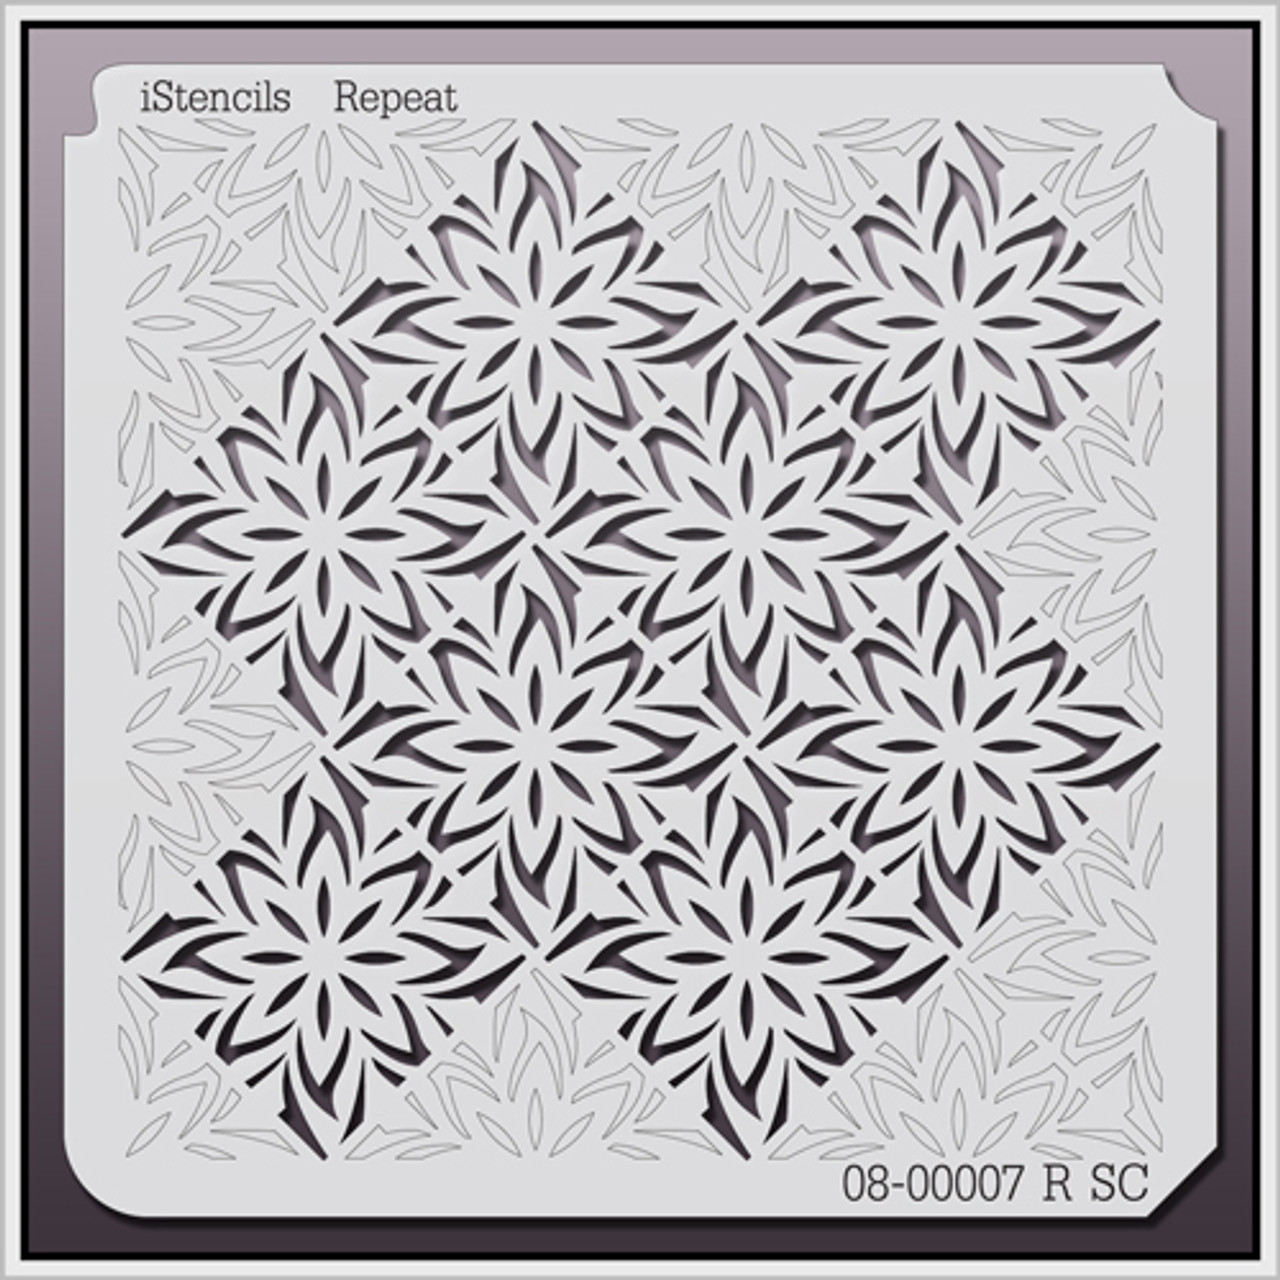 93-00025 R SC Vintage Repeating Floral Stencil